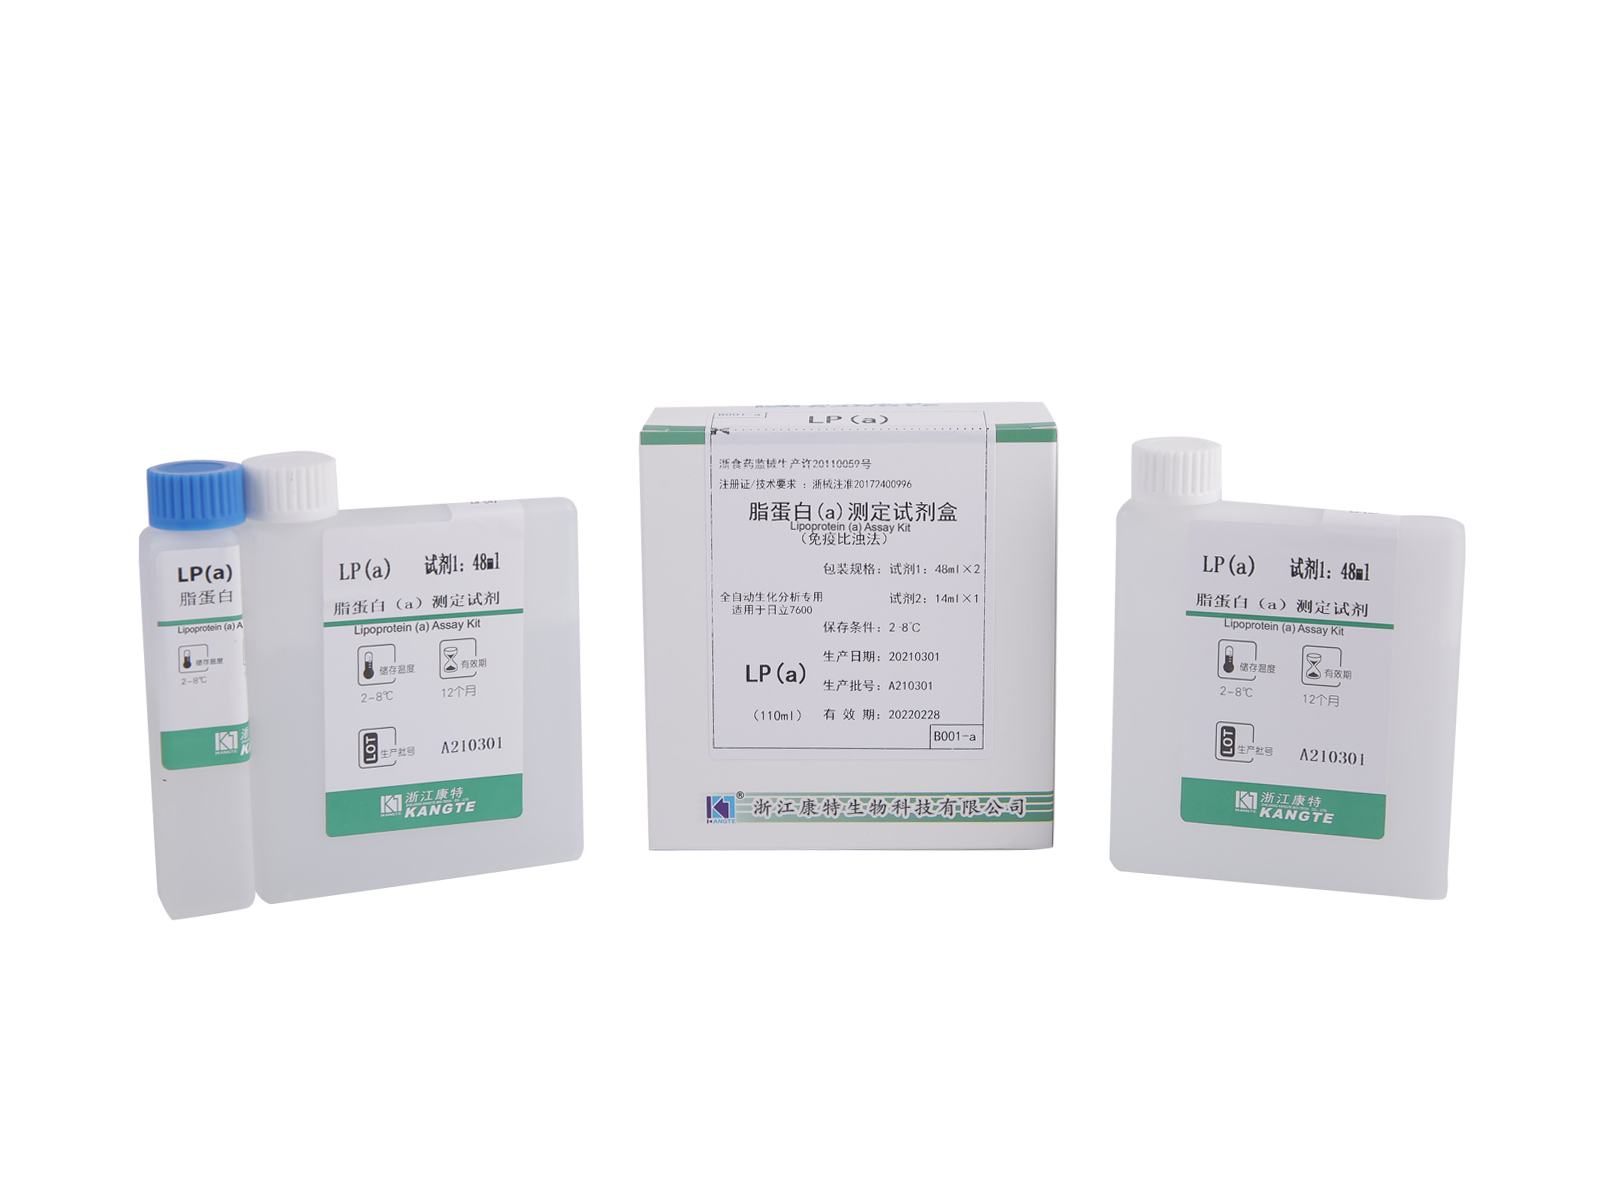 【LP(a)】Lipoprotein (a) Assay Kit (Latex Enhanced Immunoturbidimetric পদ্ধতি)